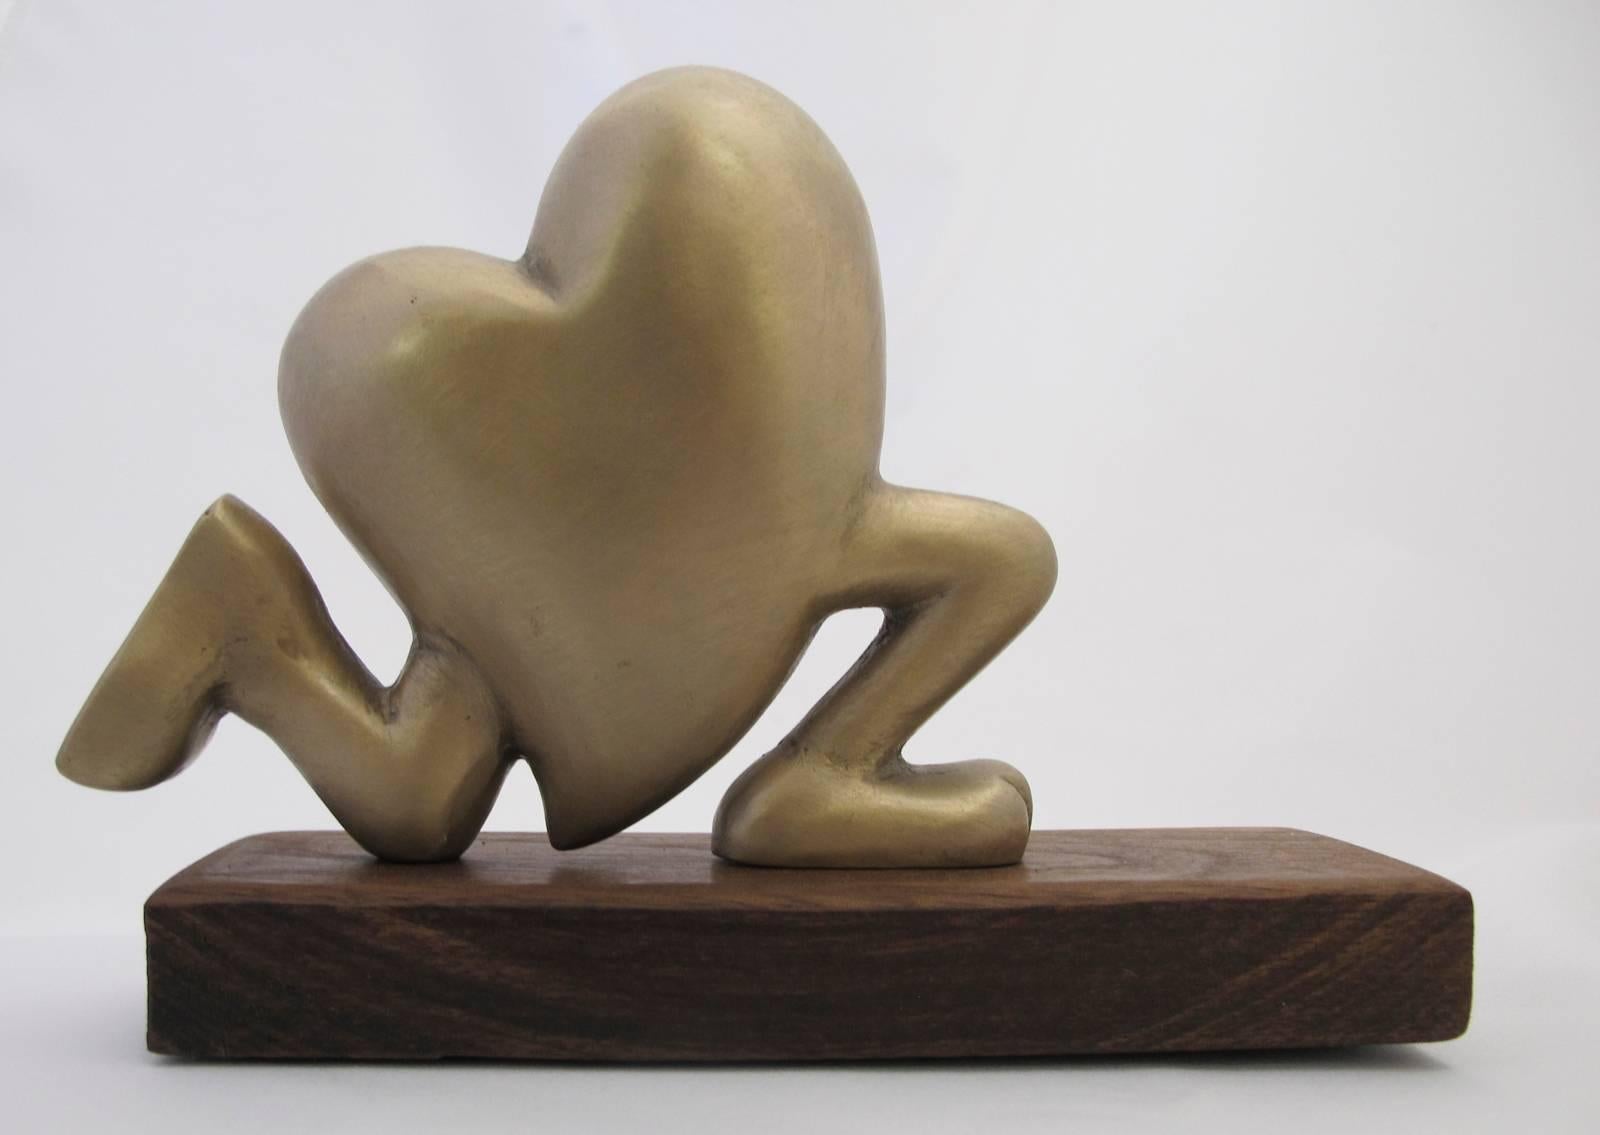 Running Heart, gold, bronze, sculpture Valentine heart shoes cartoon humor love - Art by Unknown